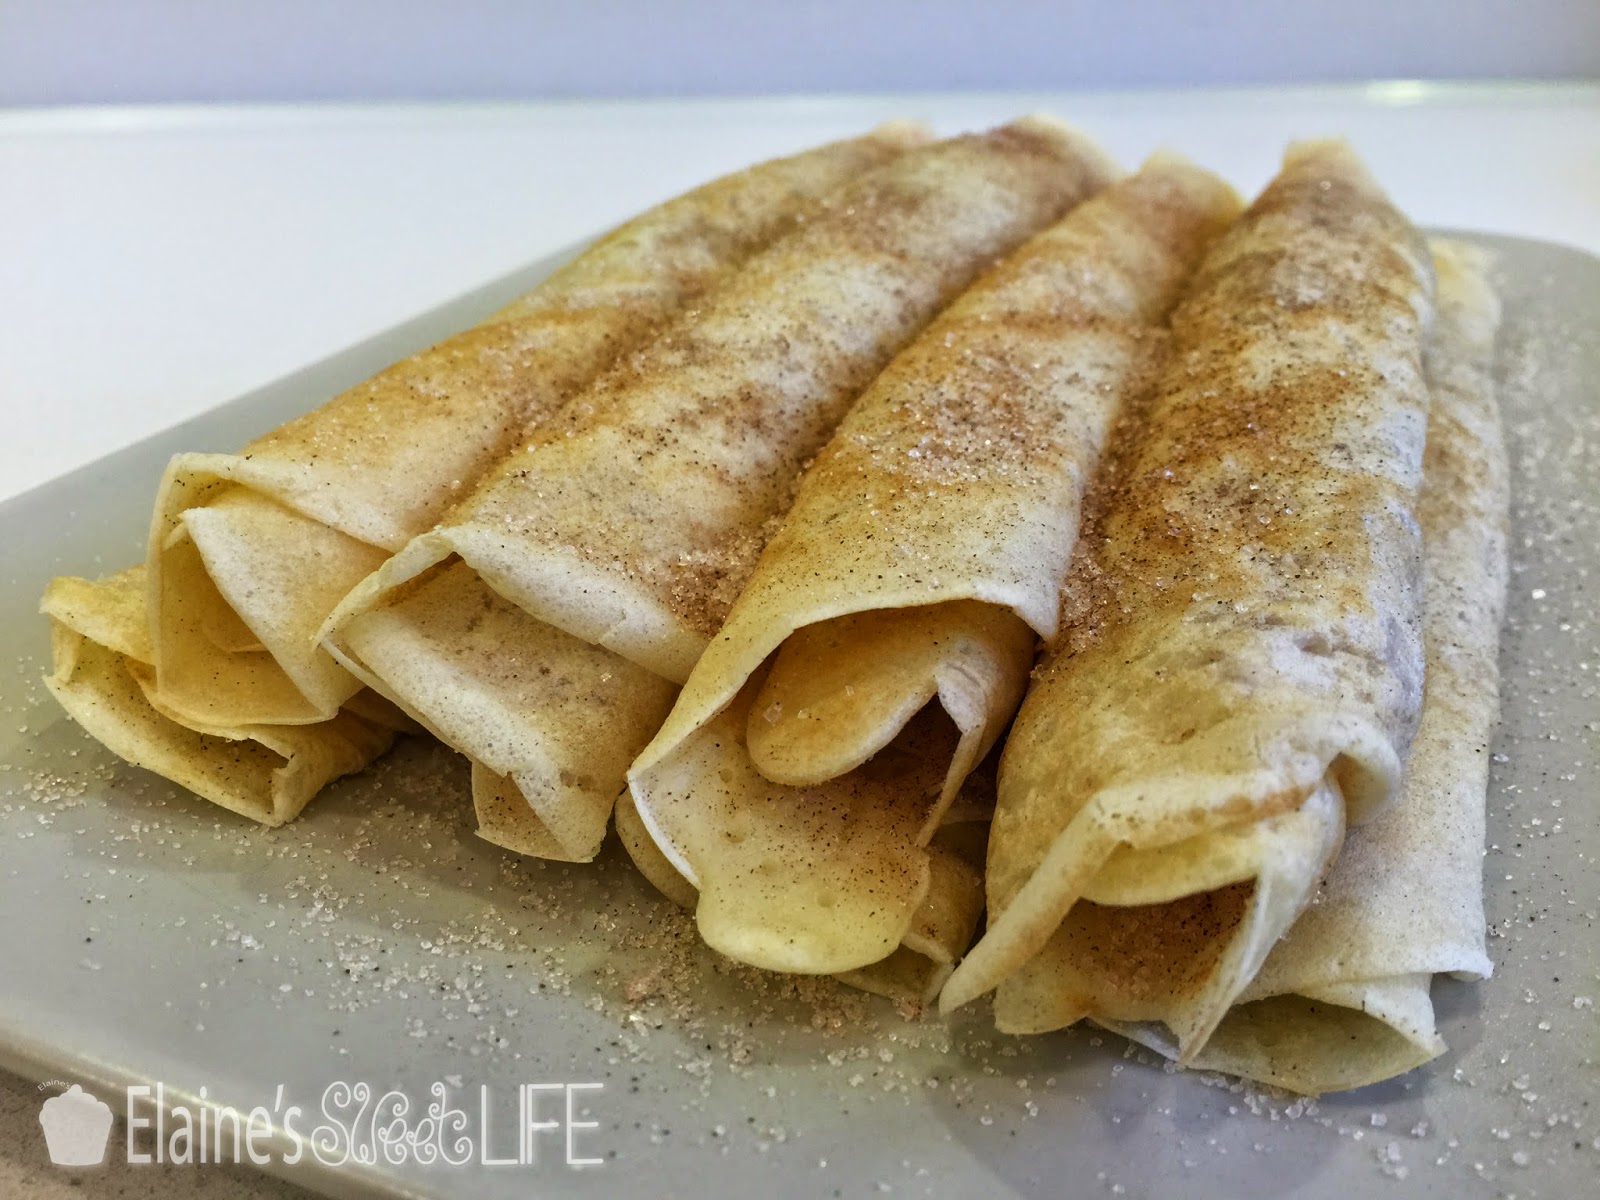 Elaine's Sweet Life: Pancake Tuesday! {Recipes}